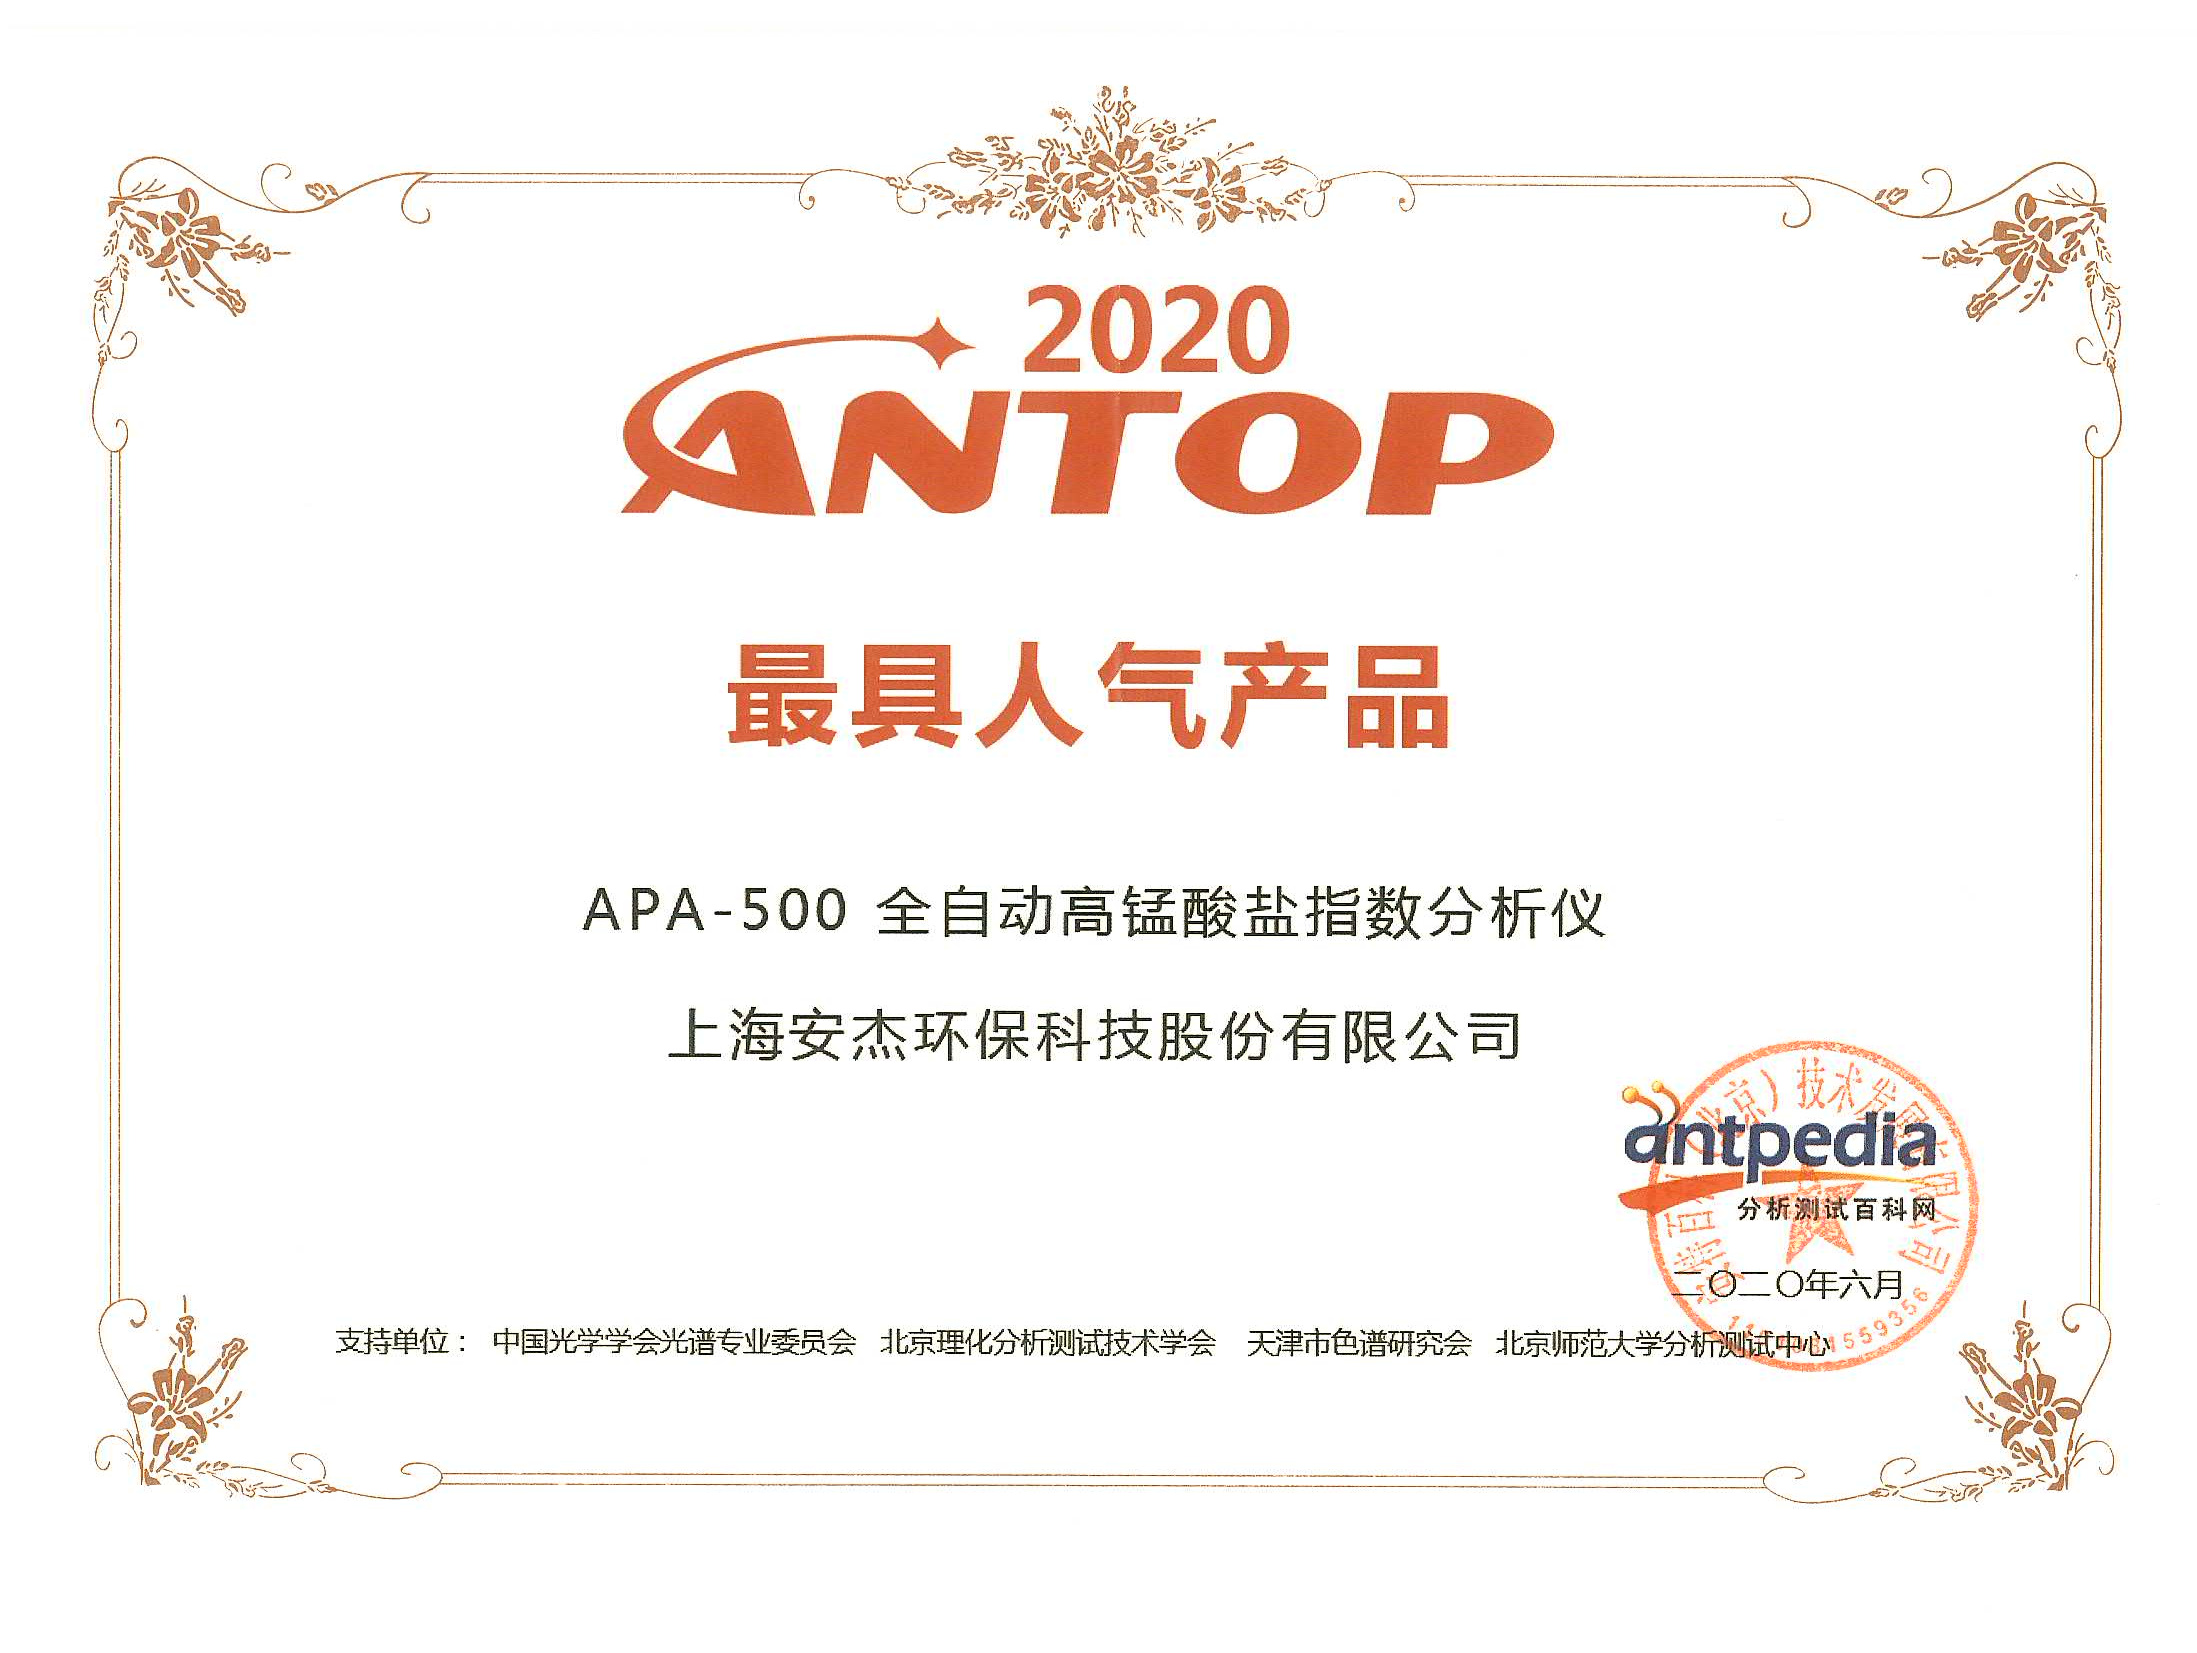 20200601 2020 antop 最具人气产品 奖状 apa-500全自动高锰酸盐指数分析仪.jpg